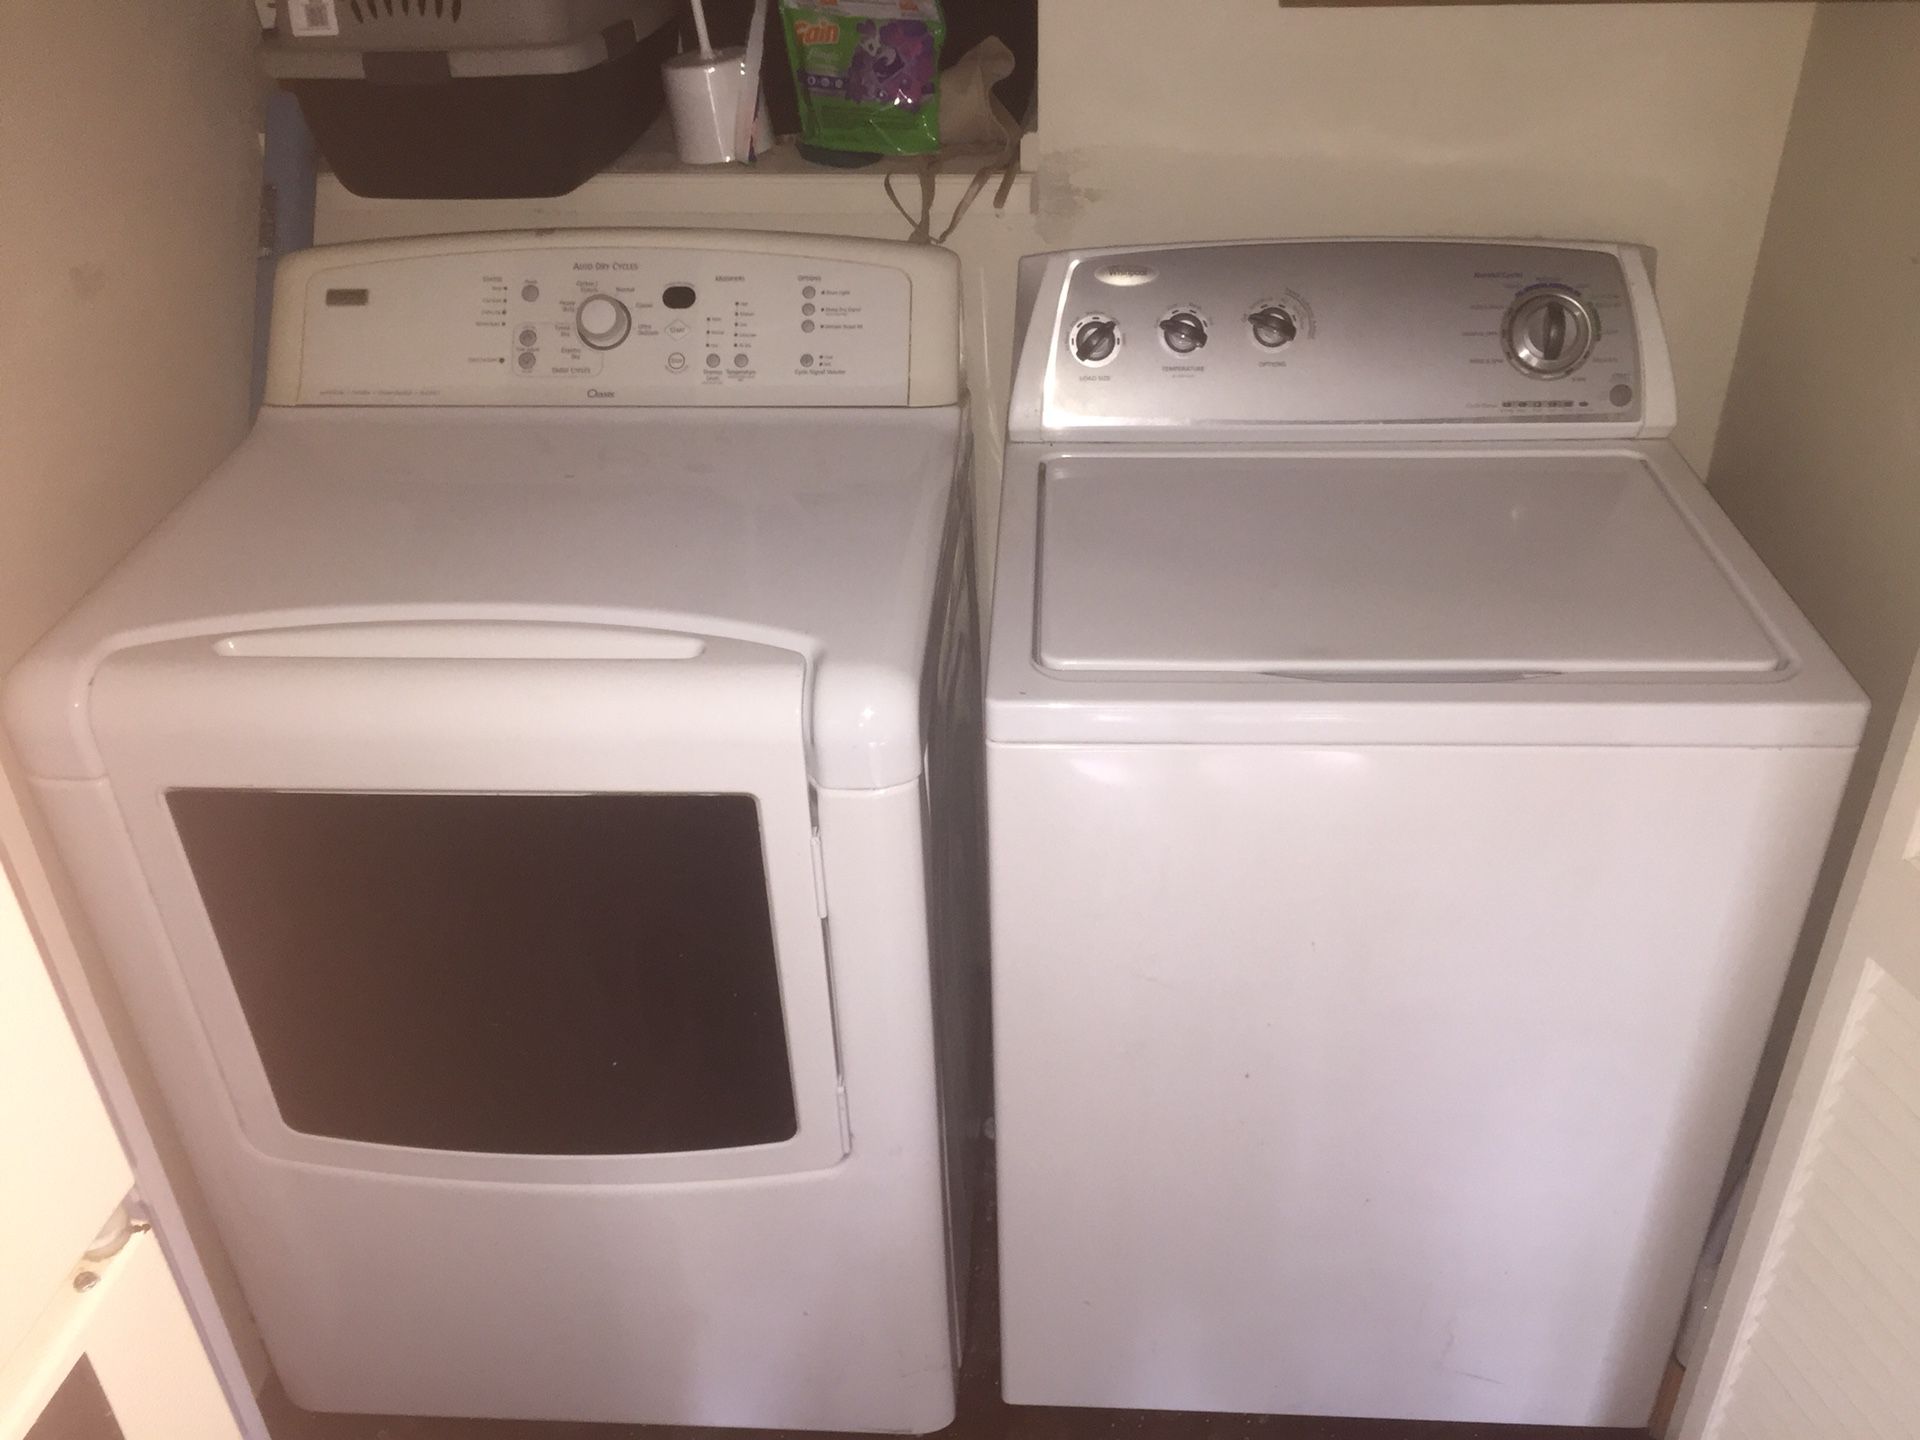 Kinmore Elite washer dryer Combo